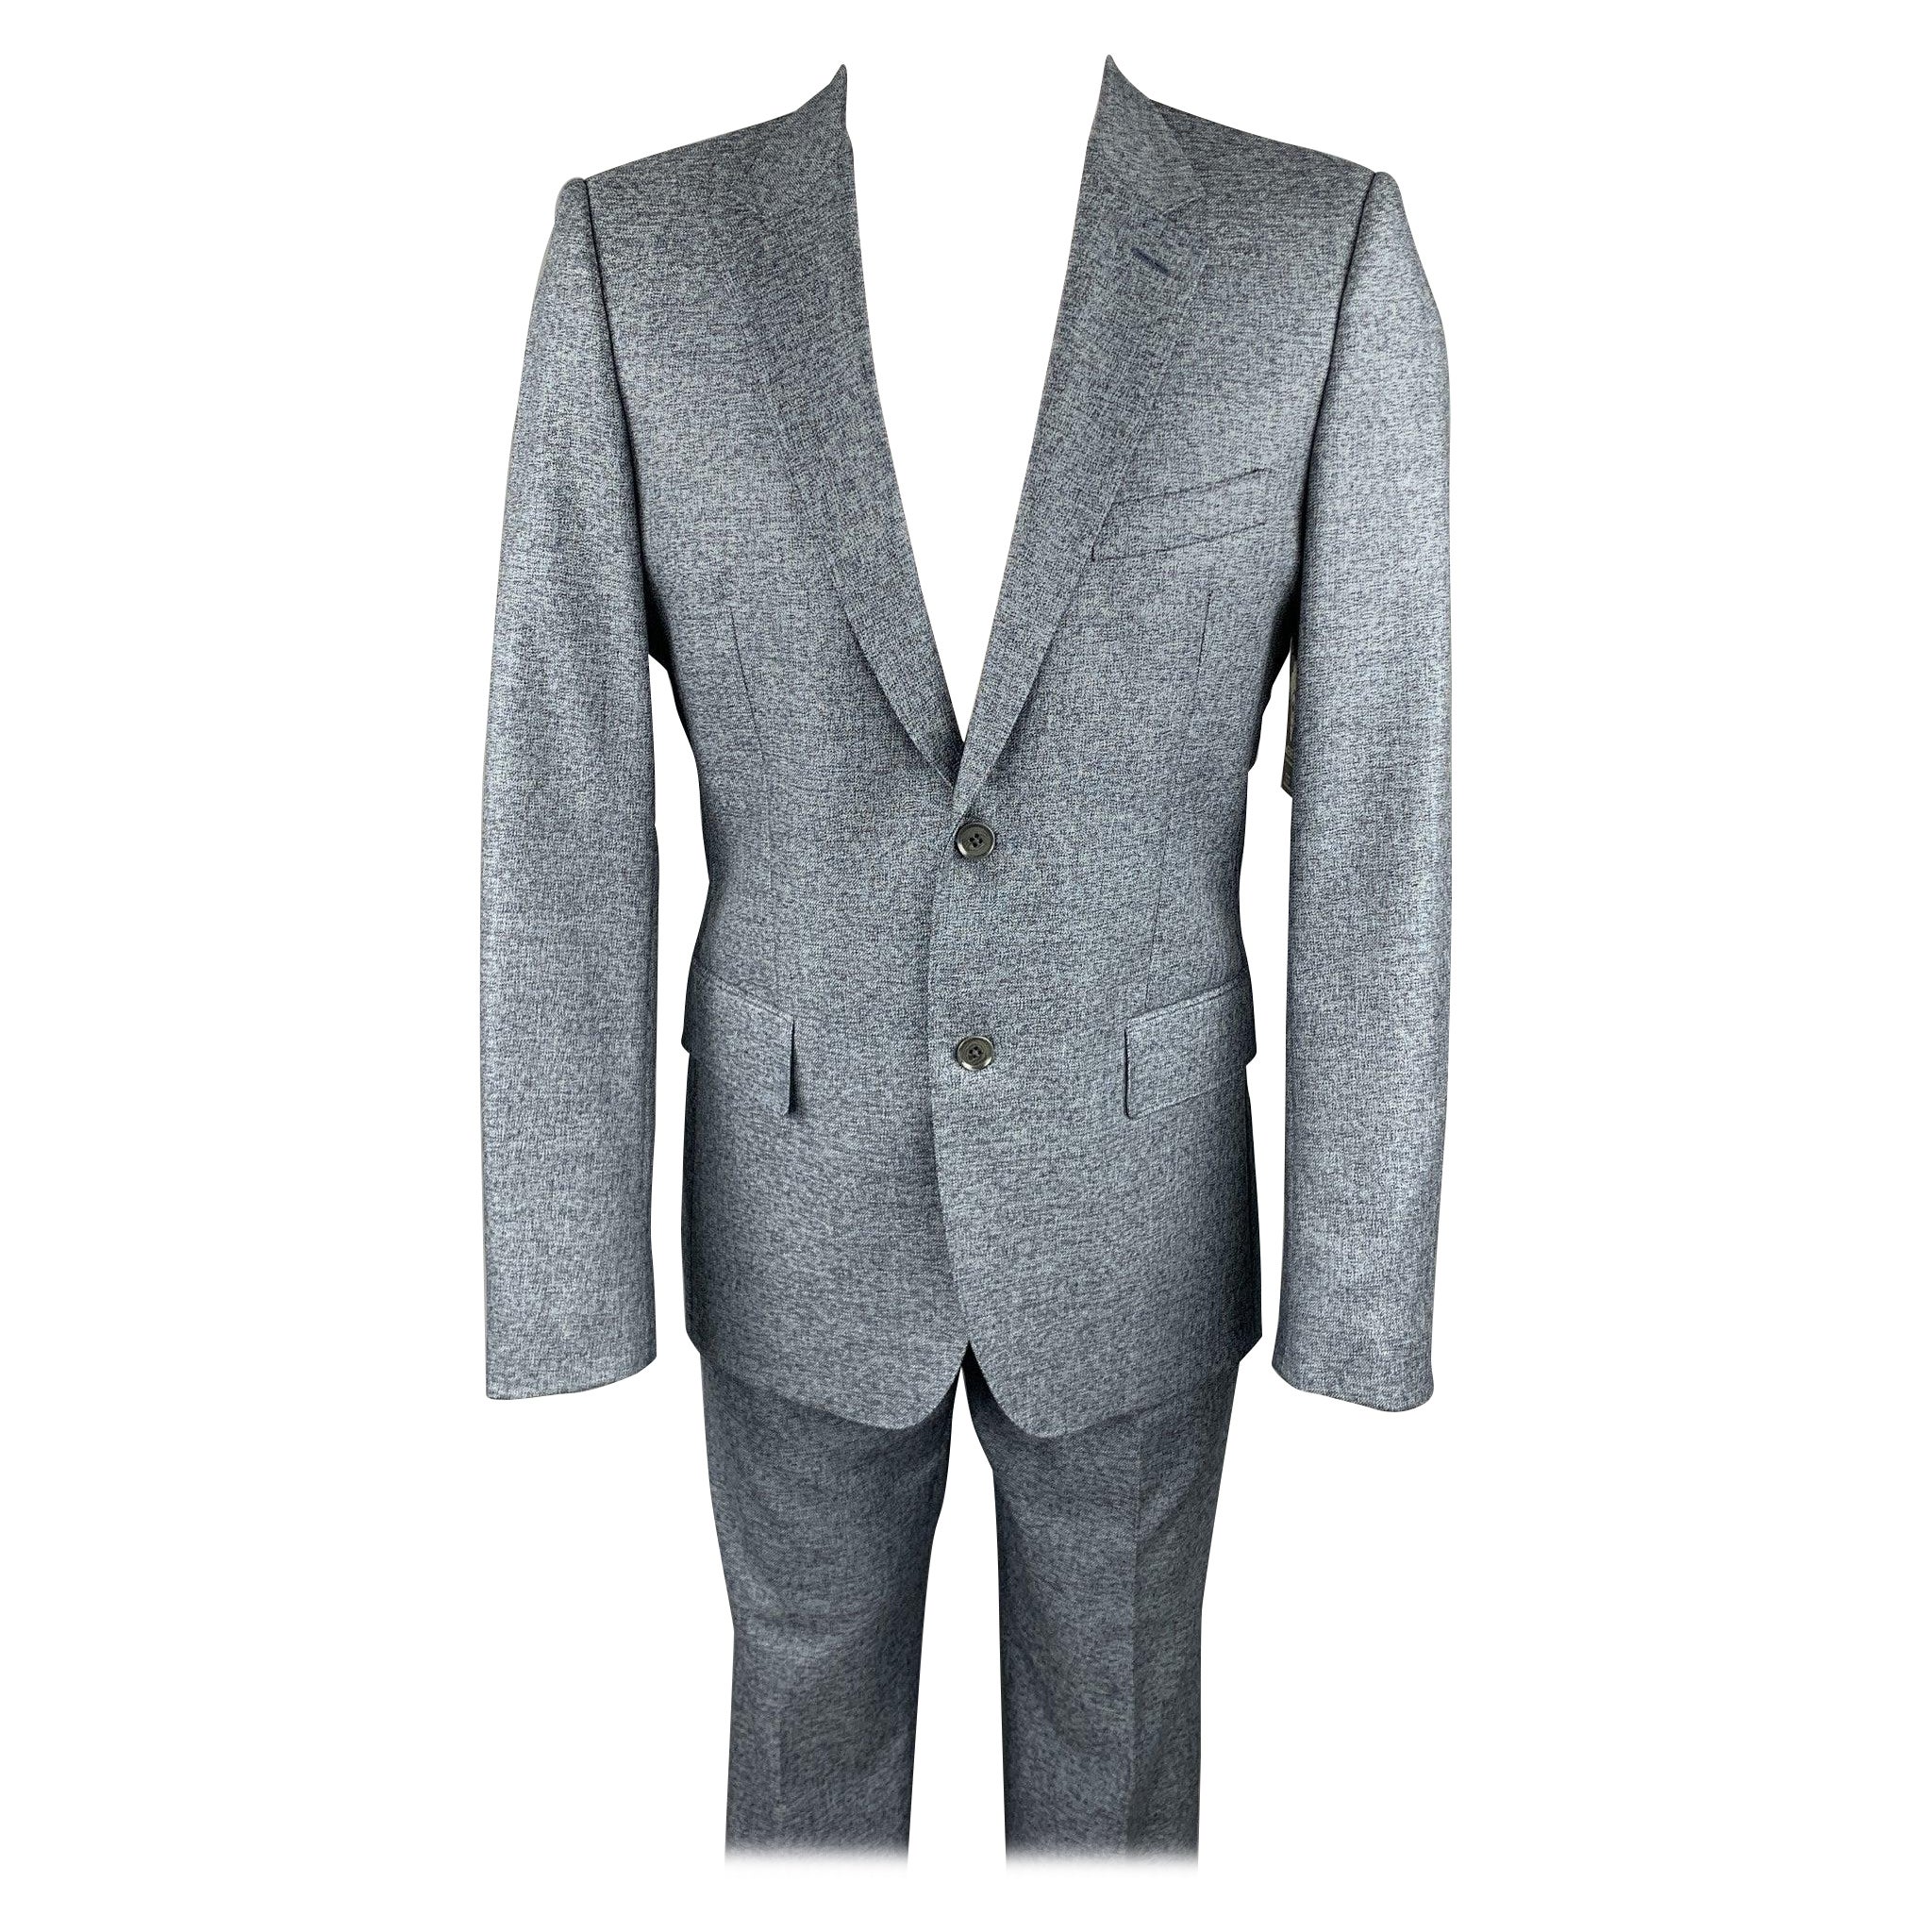 CALVIN KLEIN COLLECTION Size 38 Blue Heather Wool Notch Lapel Suit For Sale